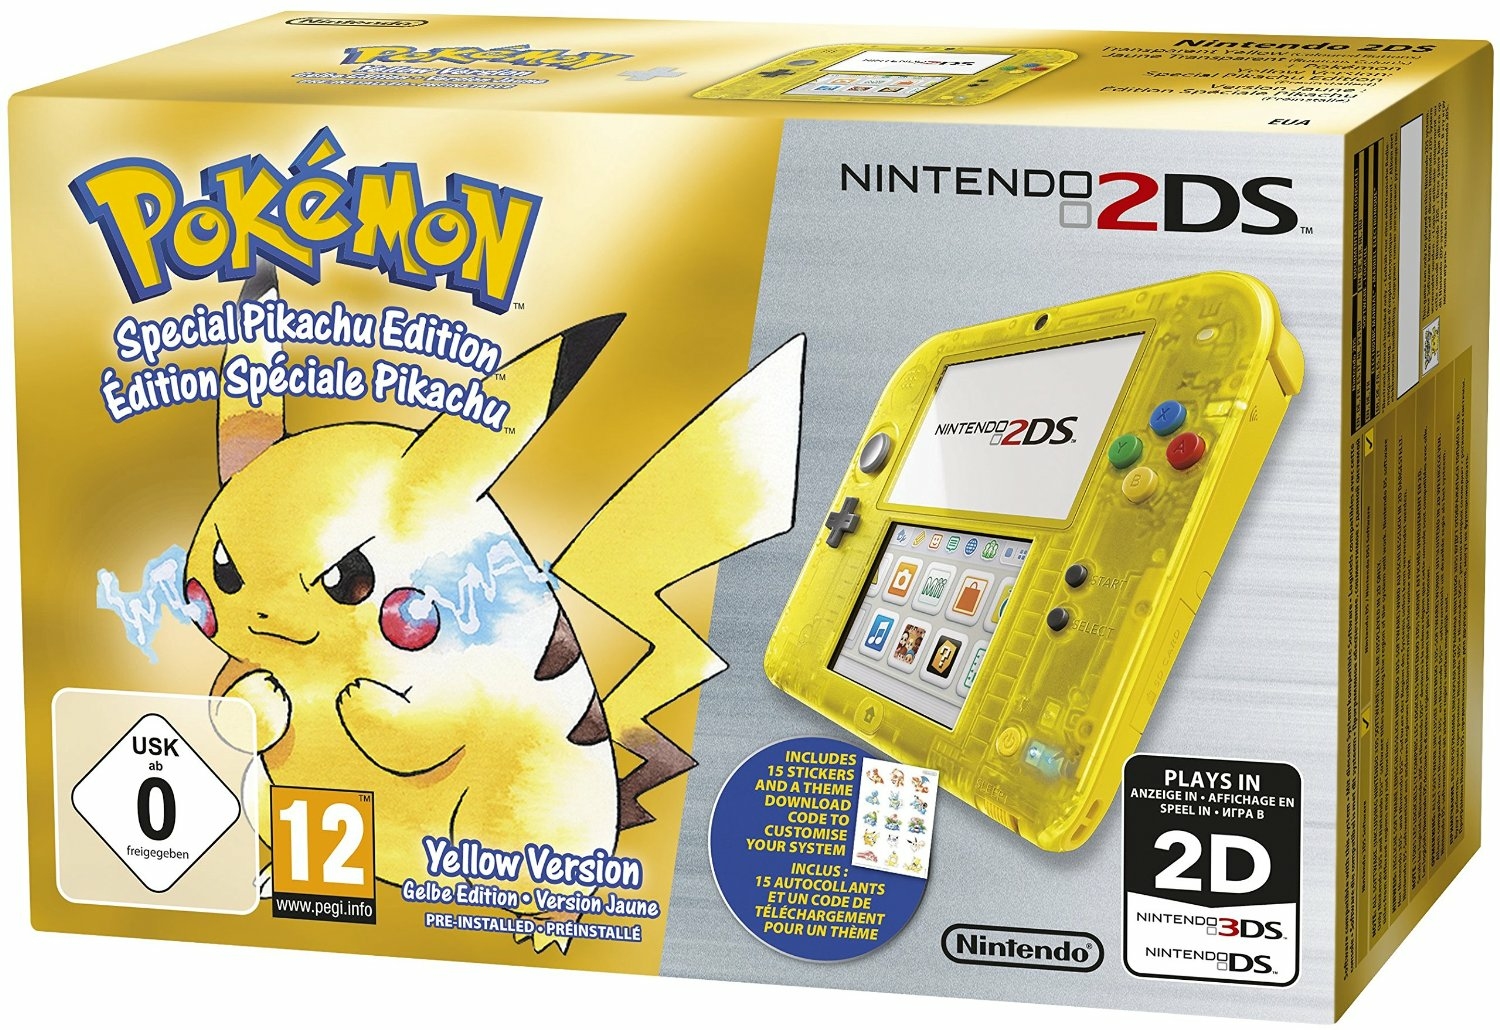 Nintendo купить в москве. Нинтендо 3дс приставка. Pokemon Pikachu Nintendo игровая приставка. Nintendo 2ds Pokemon Edition. Nintendo 2ds Yellow.